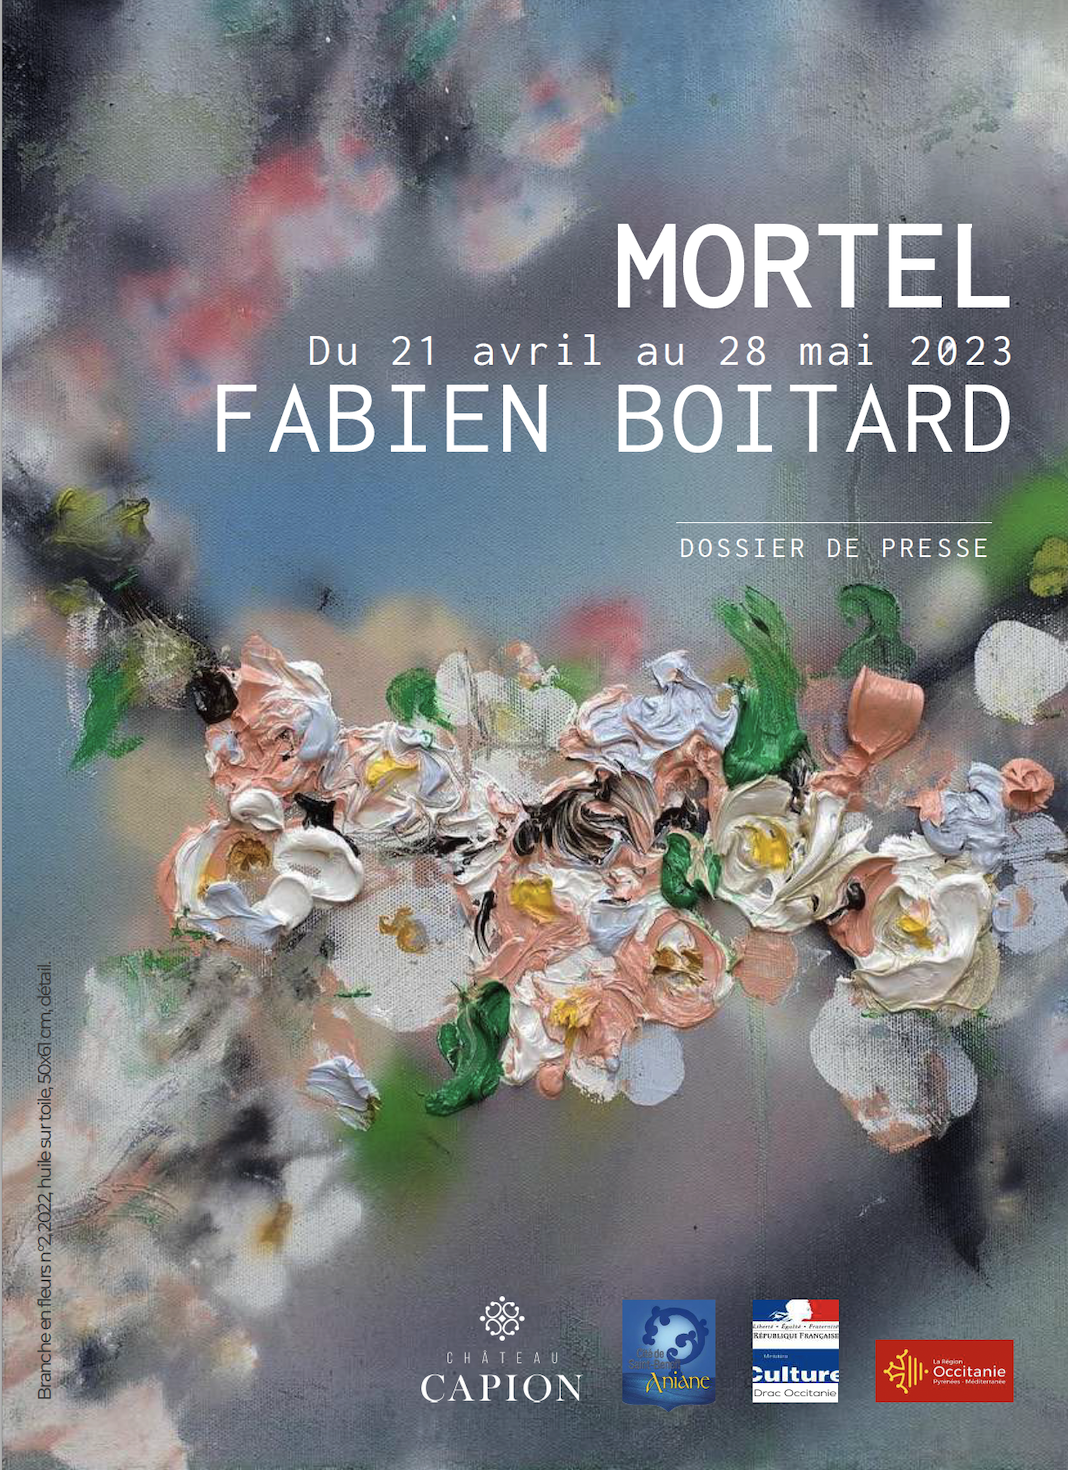 Exposition "Mortel" de Fabien Boitard - Aniane